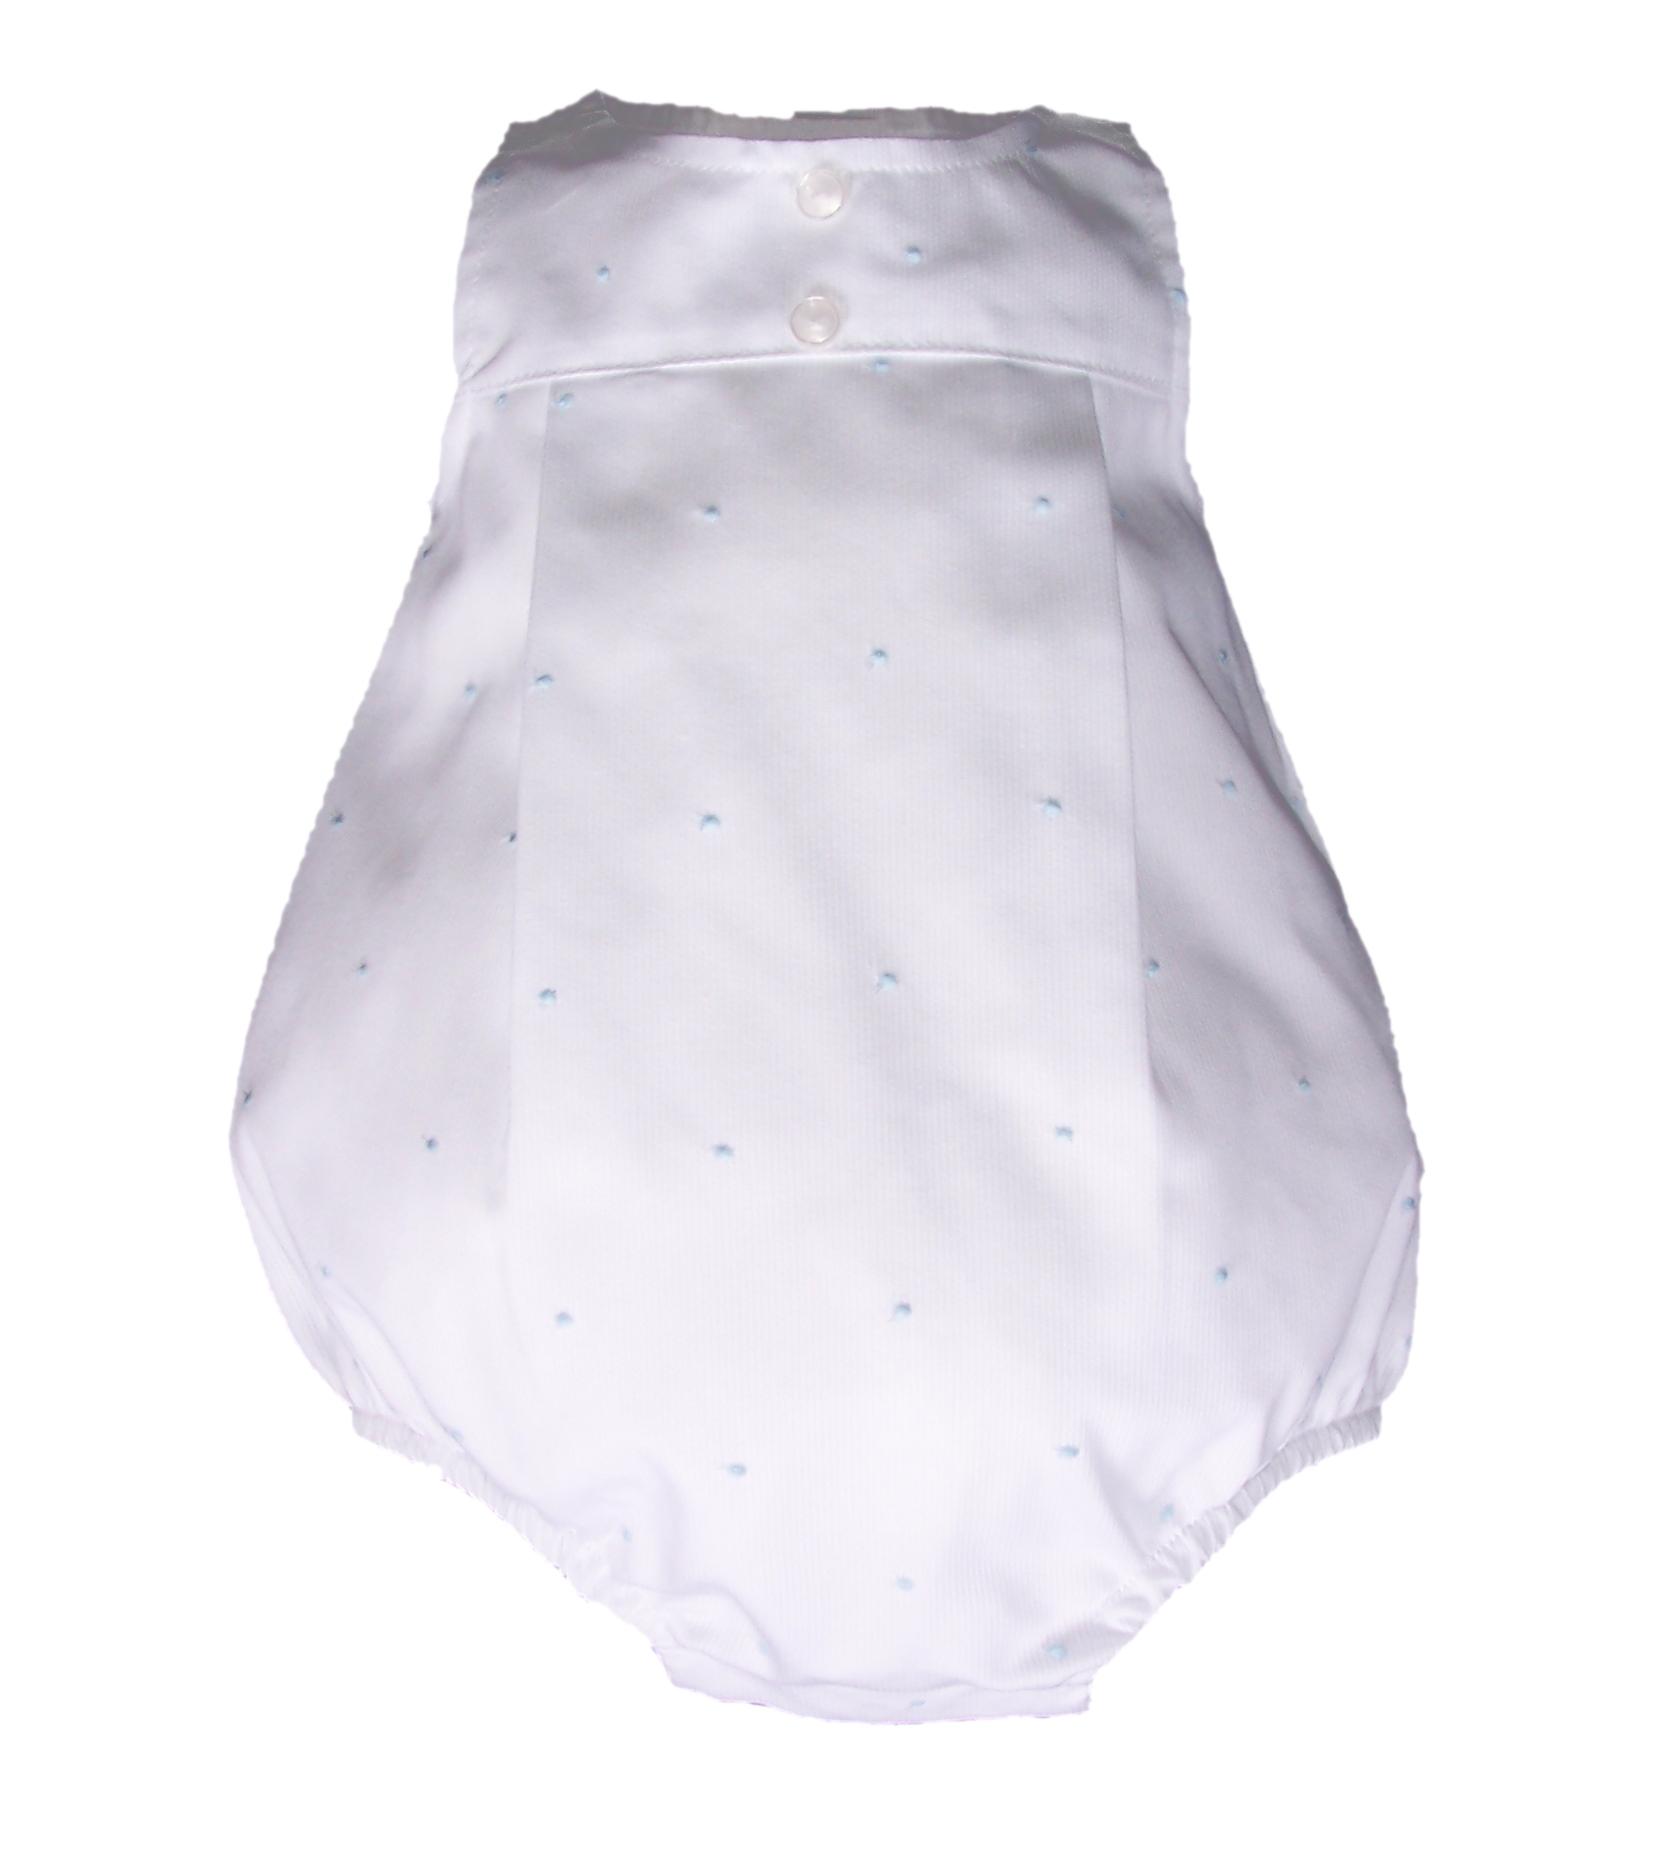 Foto Ranita blanca con topos bordados en azul celeste de Laranjinha-9 meses foto 310931